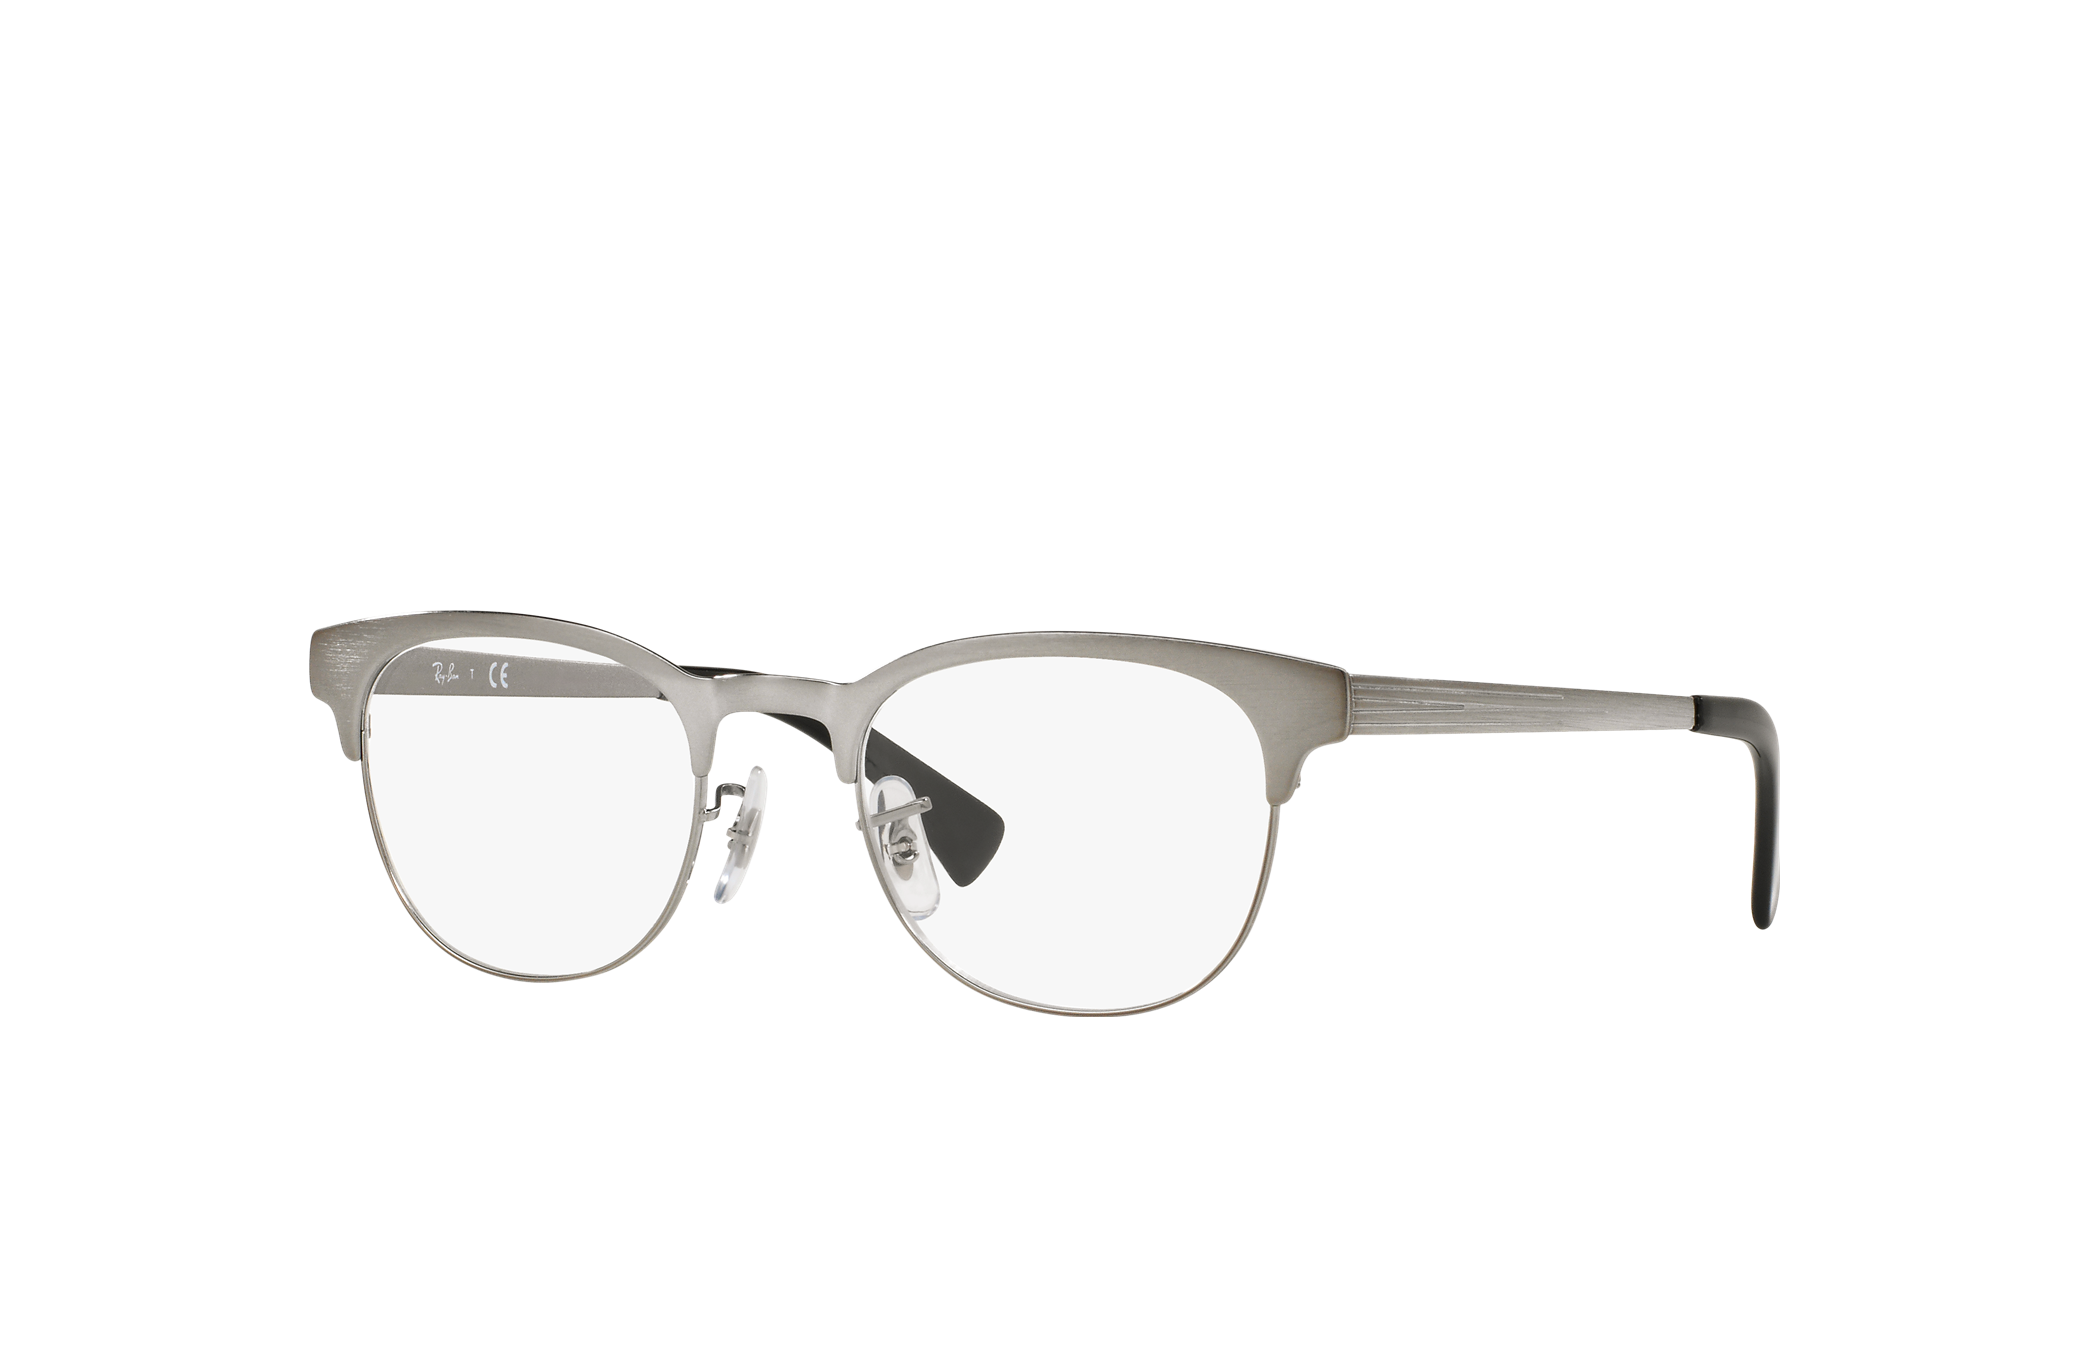 Rb6317 Eyeglasses with Gunmetal Frame - RB6317 | Ray-Ban®